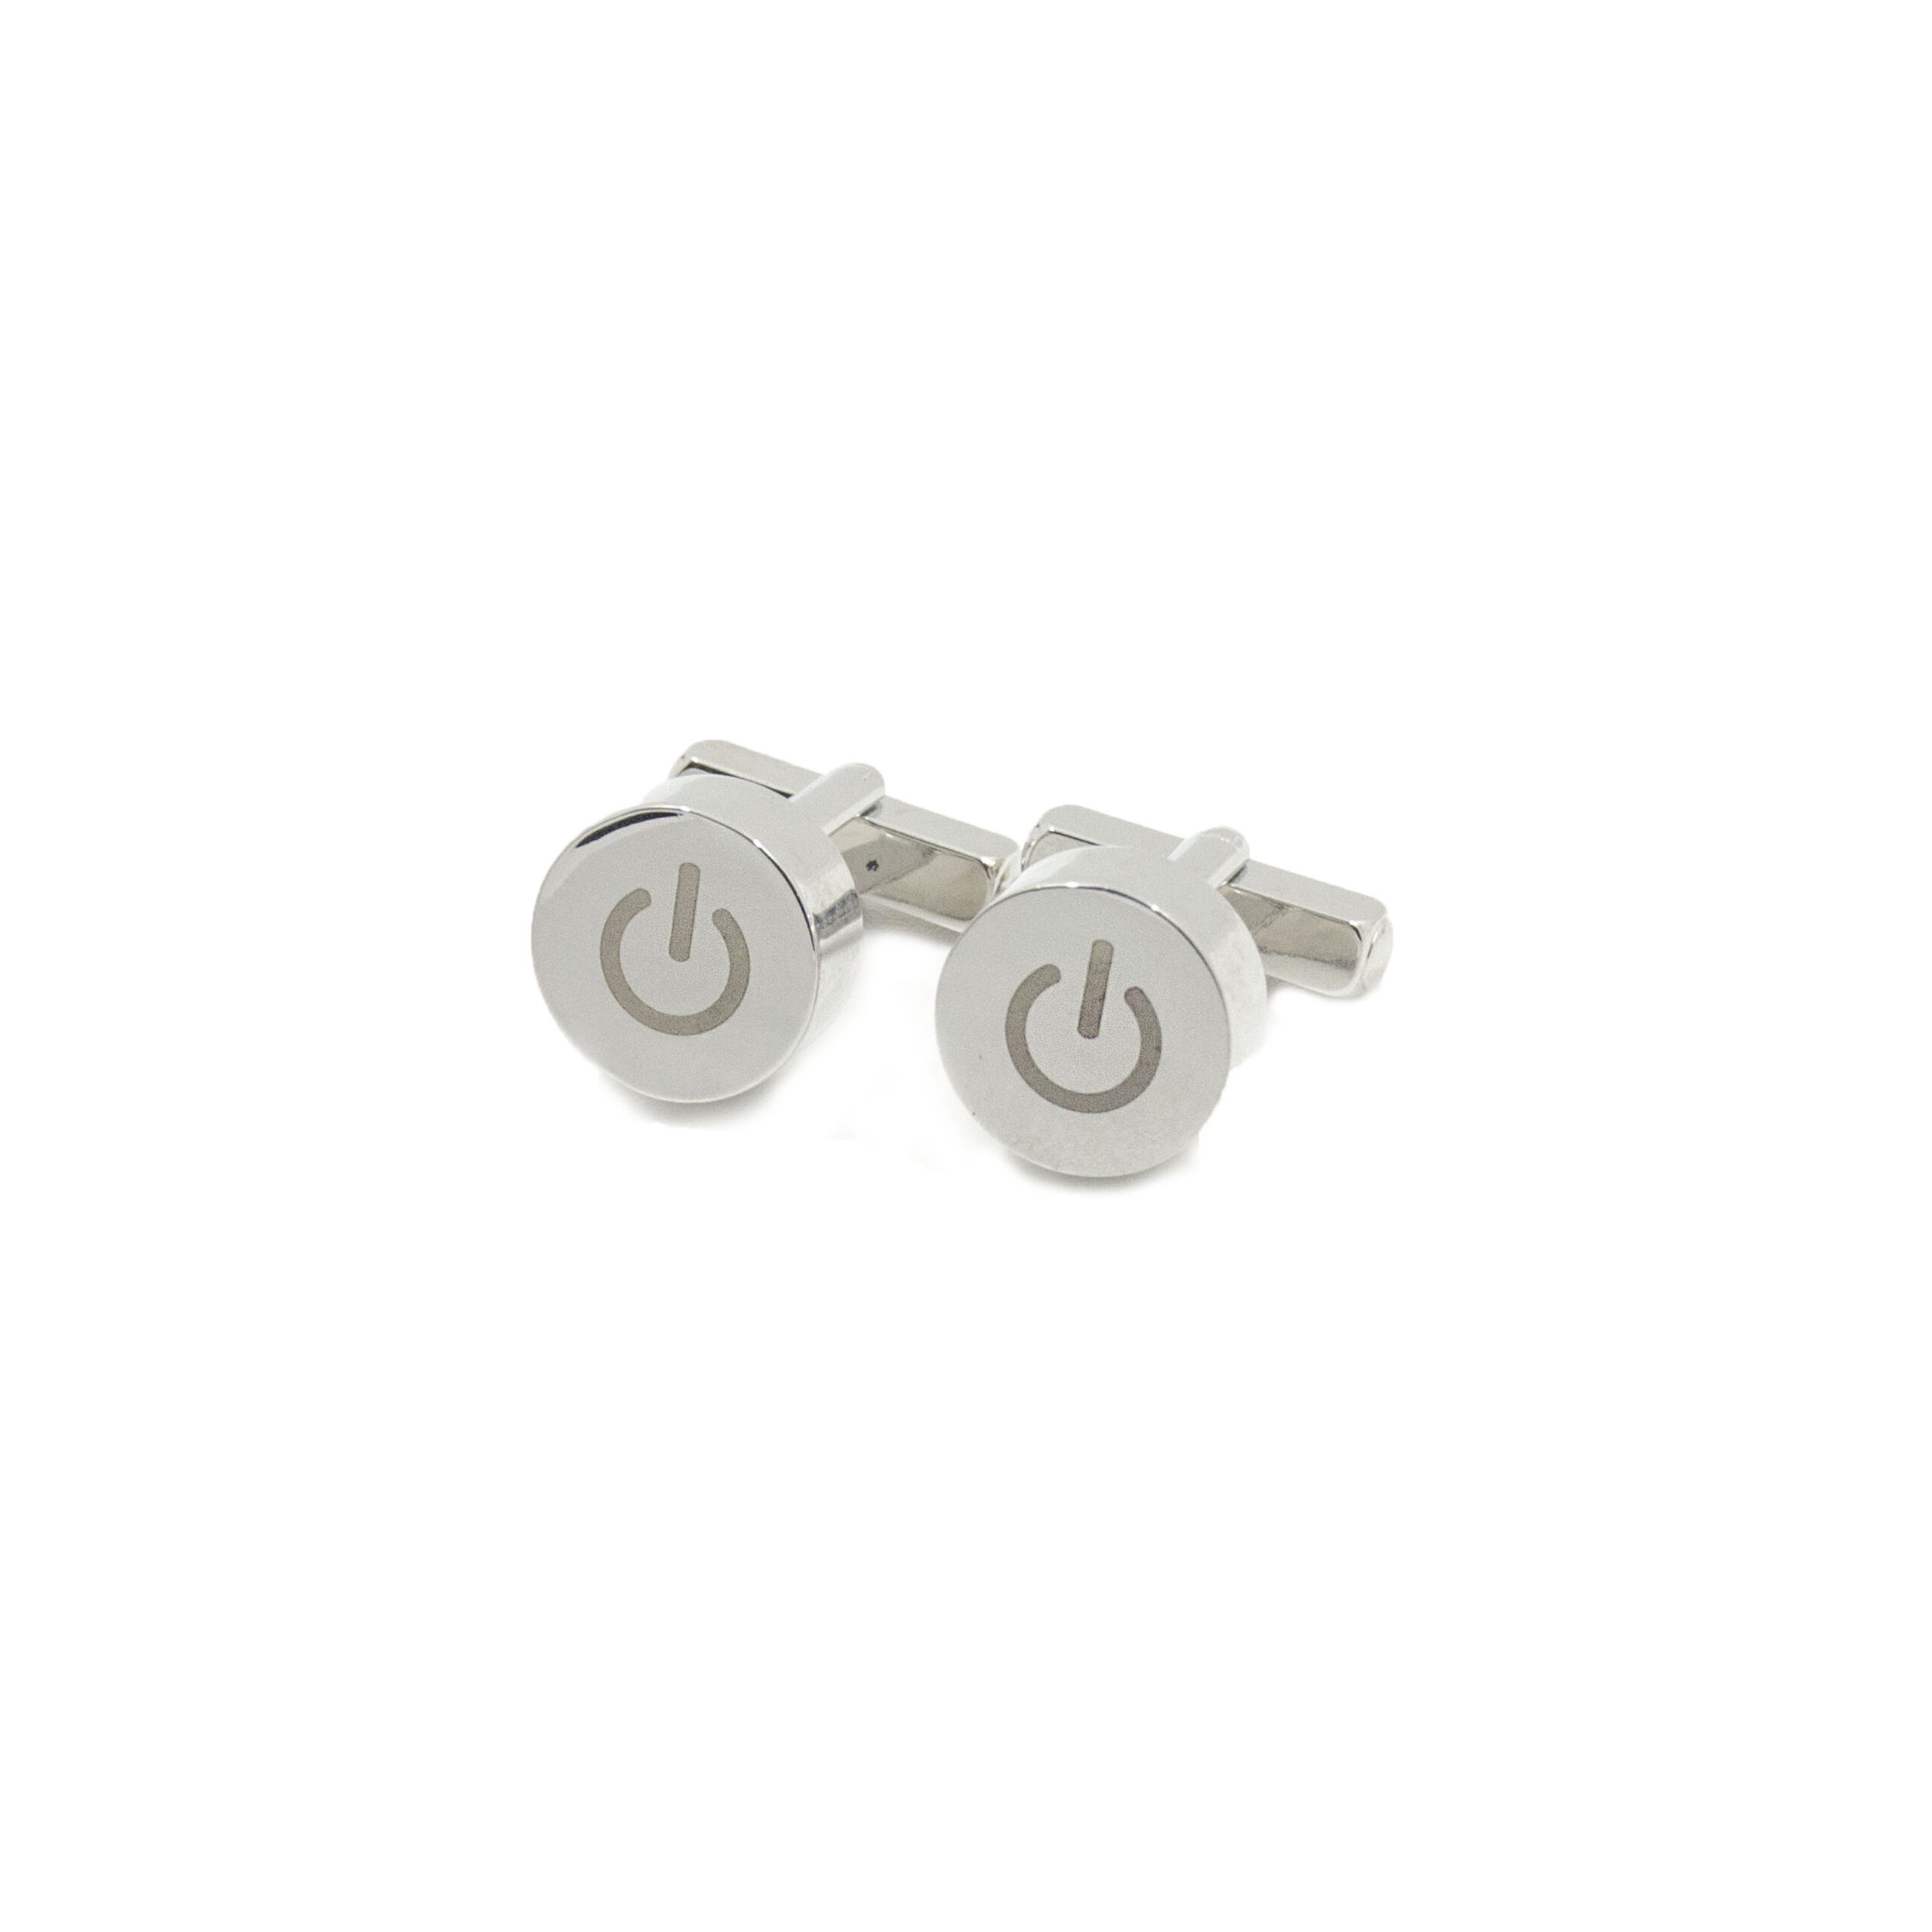 Cufflers Designer Cufflinks with Free Gift Box – White Circle Power Button Design – CU-4003